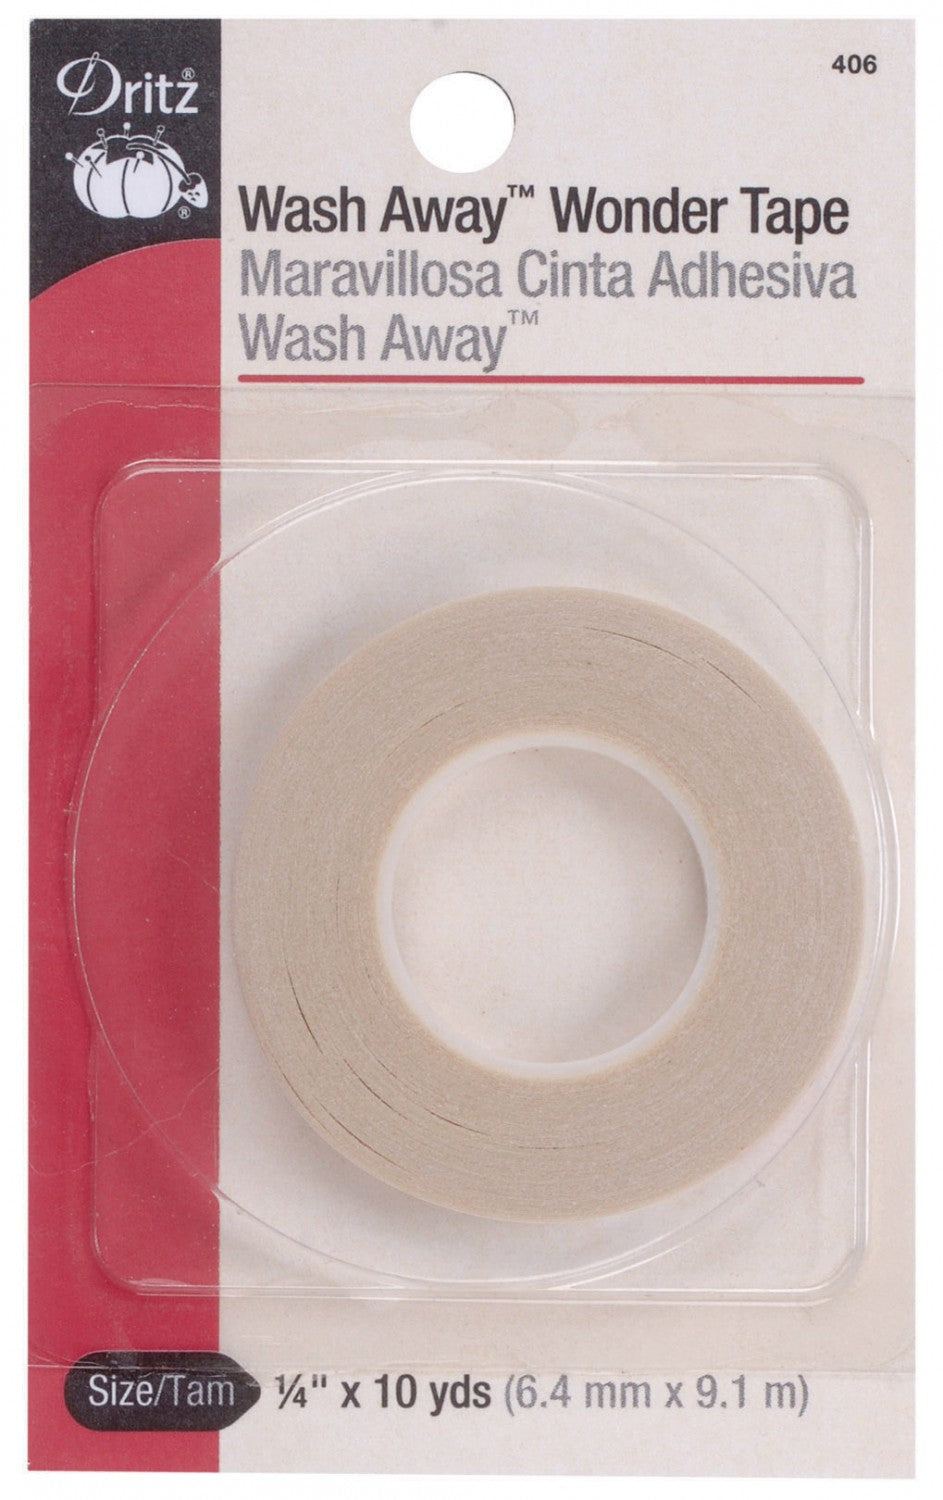 Wash Away Wonder Tape by Dritz- 1/4" x 10yds (6.4mm x 9.1m)